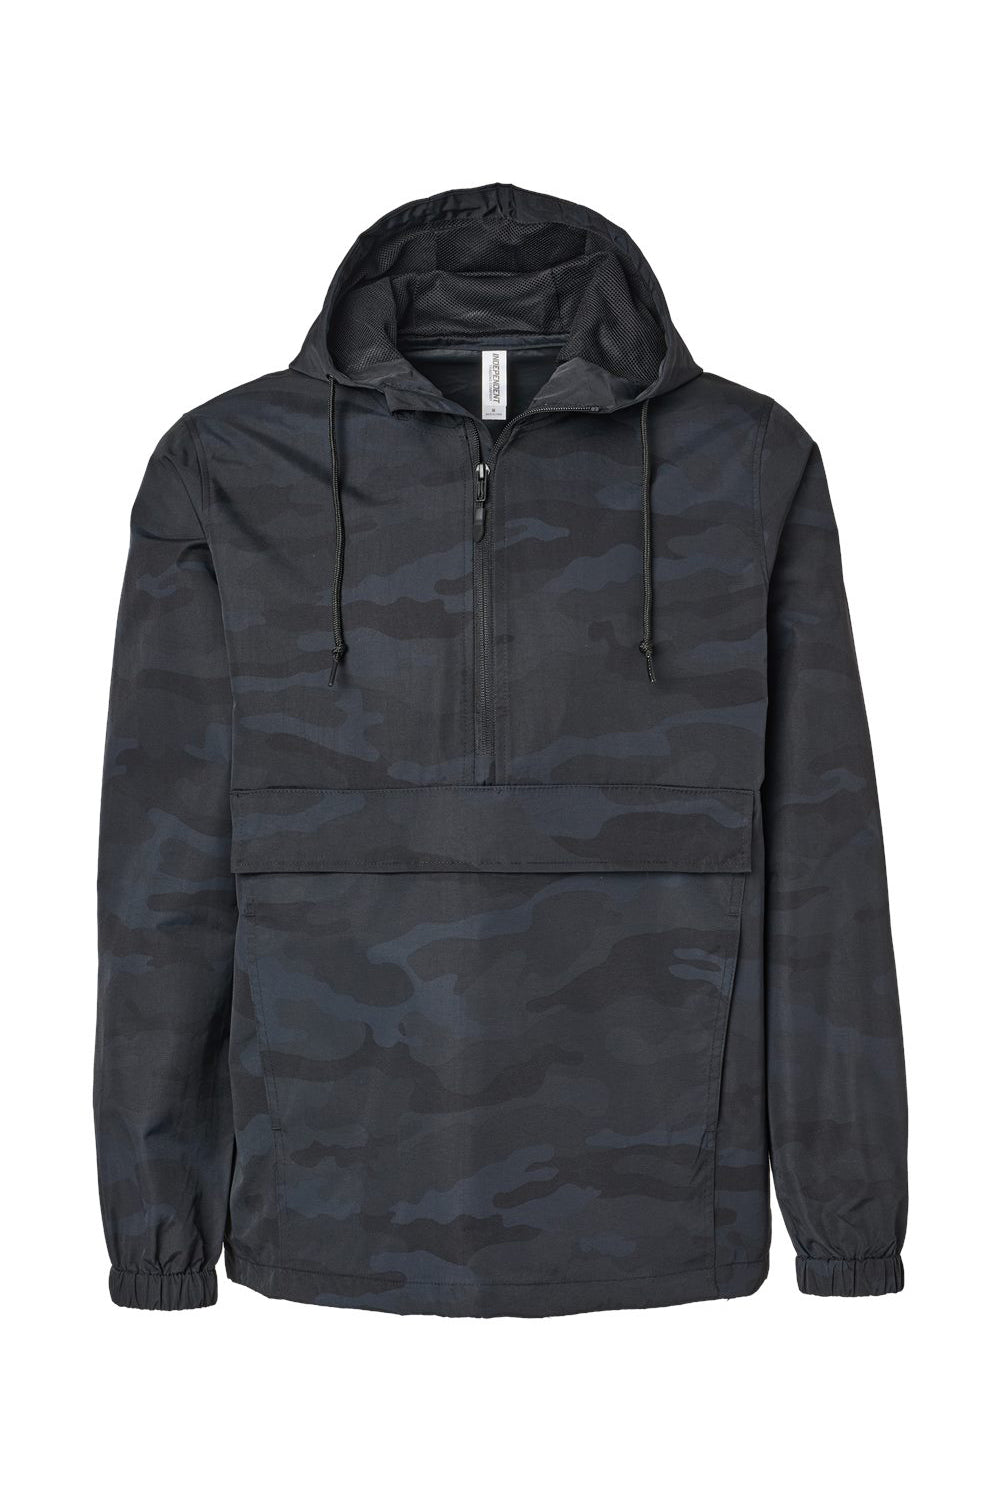 Independent Trading Co. EXP94NAW Mens Nylon Hooded Anorak Jacket Black Camo Flat Front